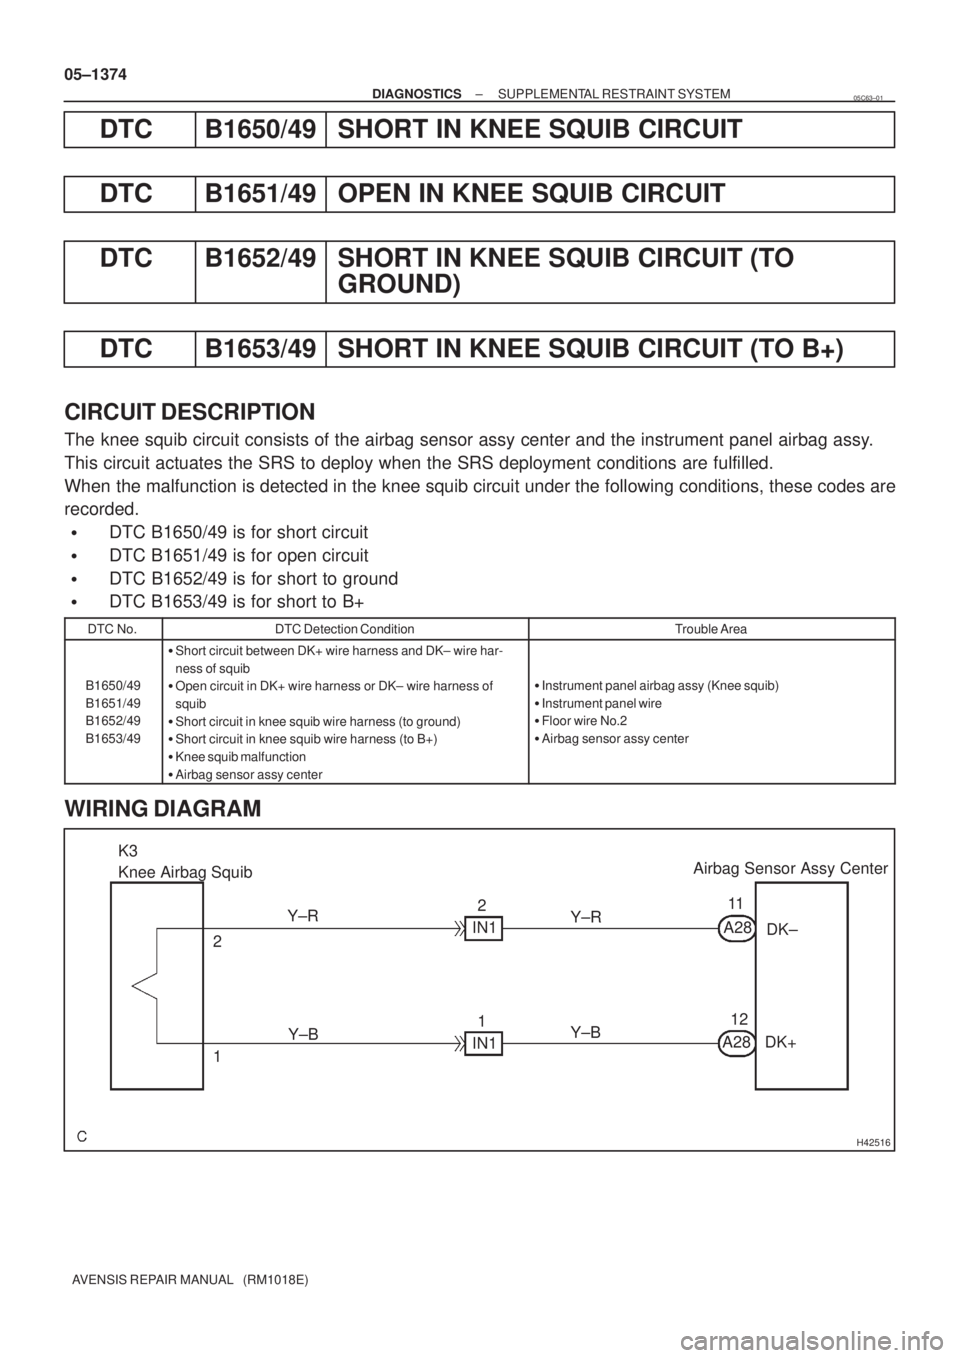 TOYOTA AVENSIS 2005  Service Repair Manual H42516
K3
Knee Airbag SquibAirbag Sensor Assy Center
Y±R
IN1
2
1A2811
DK±
1 2
A2812
IN1 Y±BY±R
Y±B
DK+ 05±1374
± DIAGNOSTICSSUPPLEMENTAL RESTRAINT SYSTEM
AVENSIS REPAIR MANUAL   (RM1018E)
DTC B